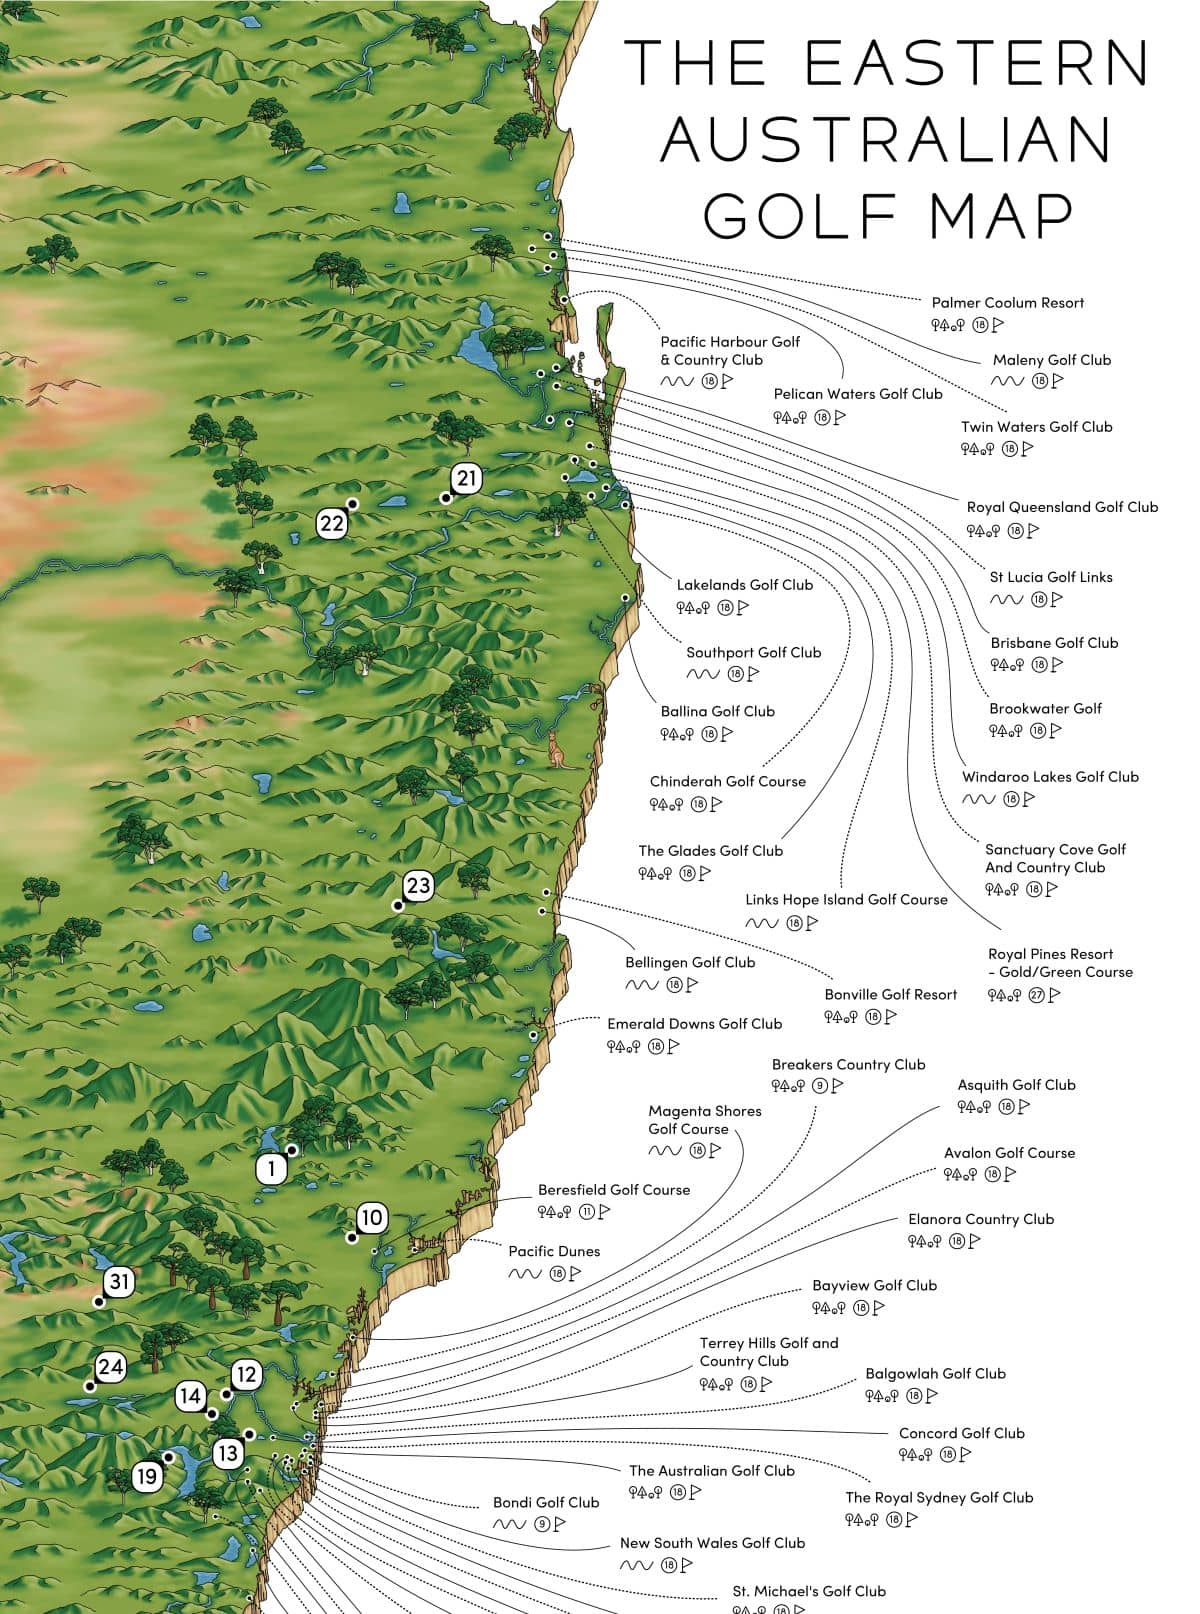 The Eastern Australian Golf Map